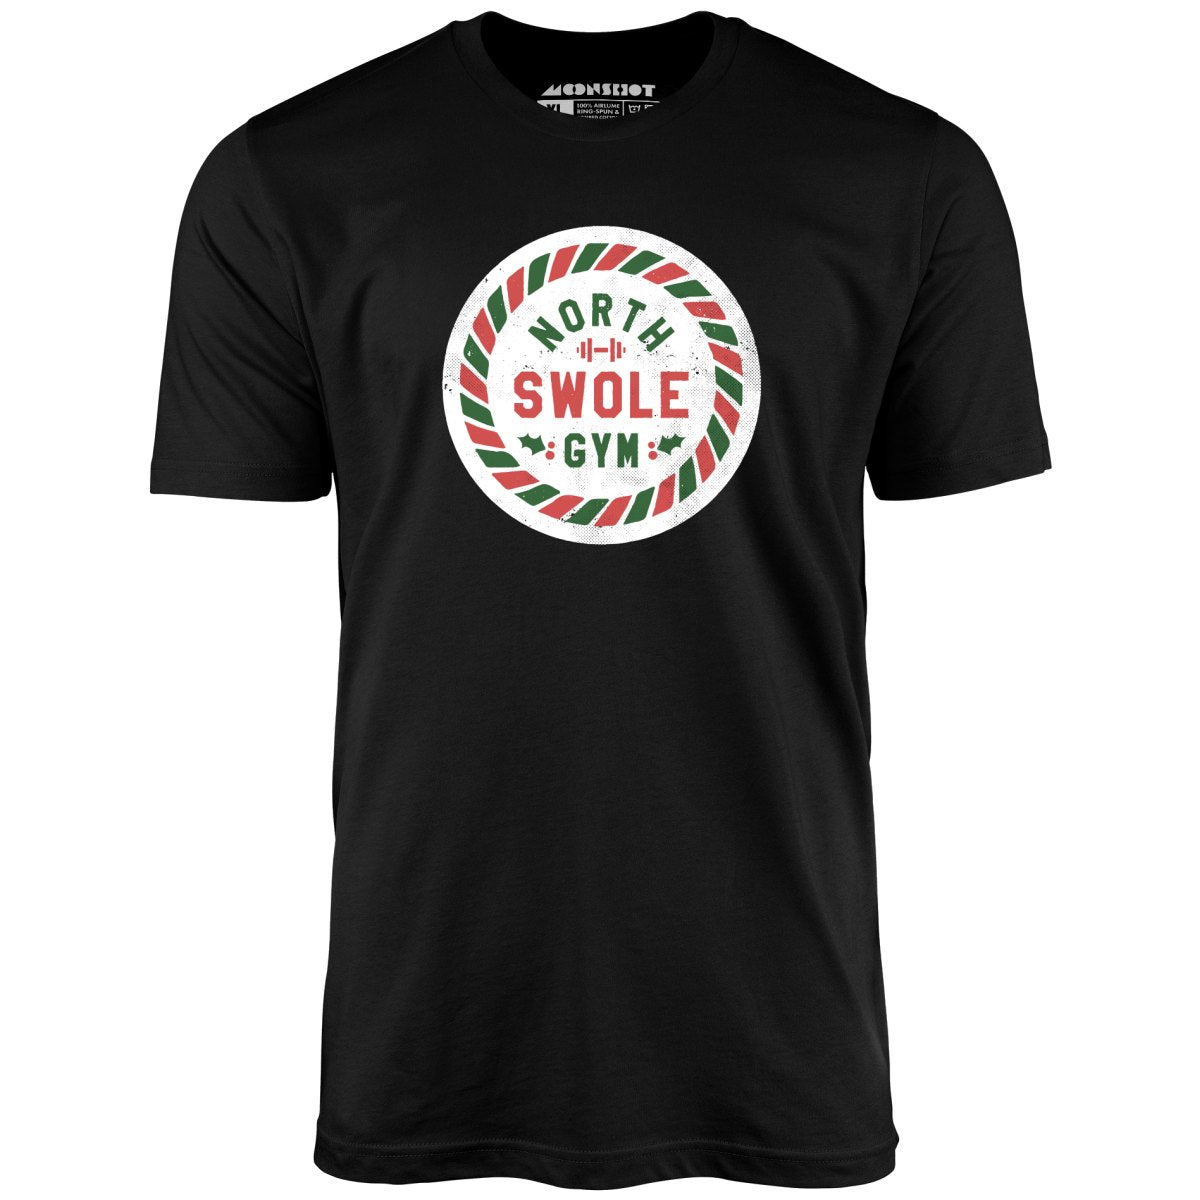 North Swole Gym - Unisex T-Shirt